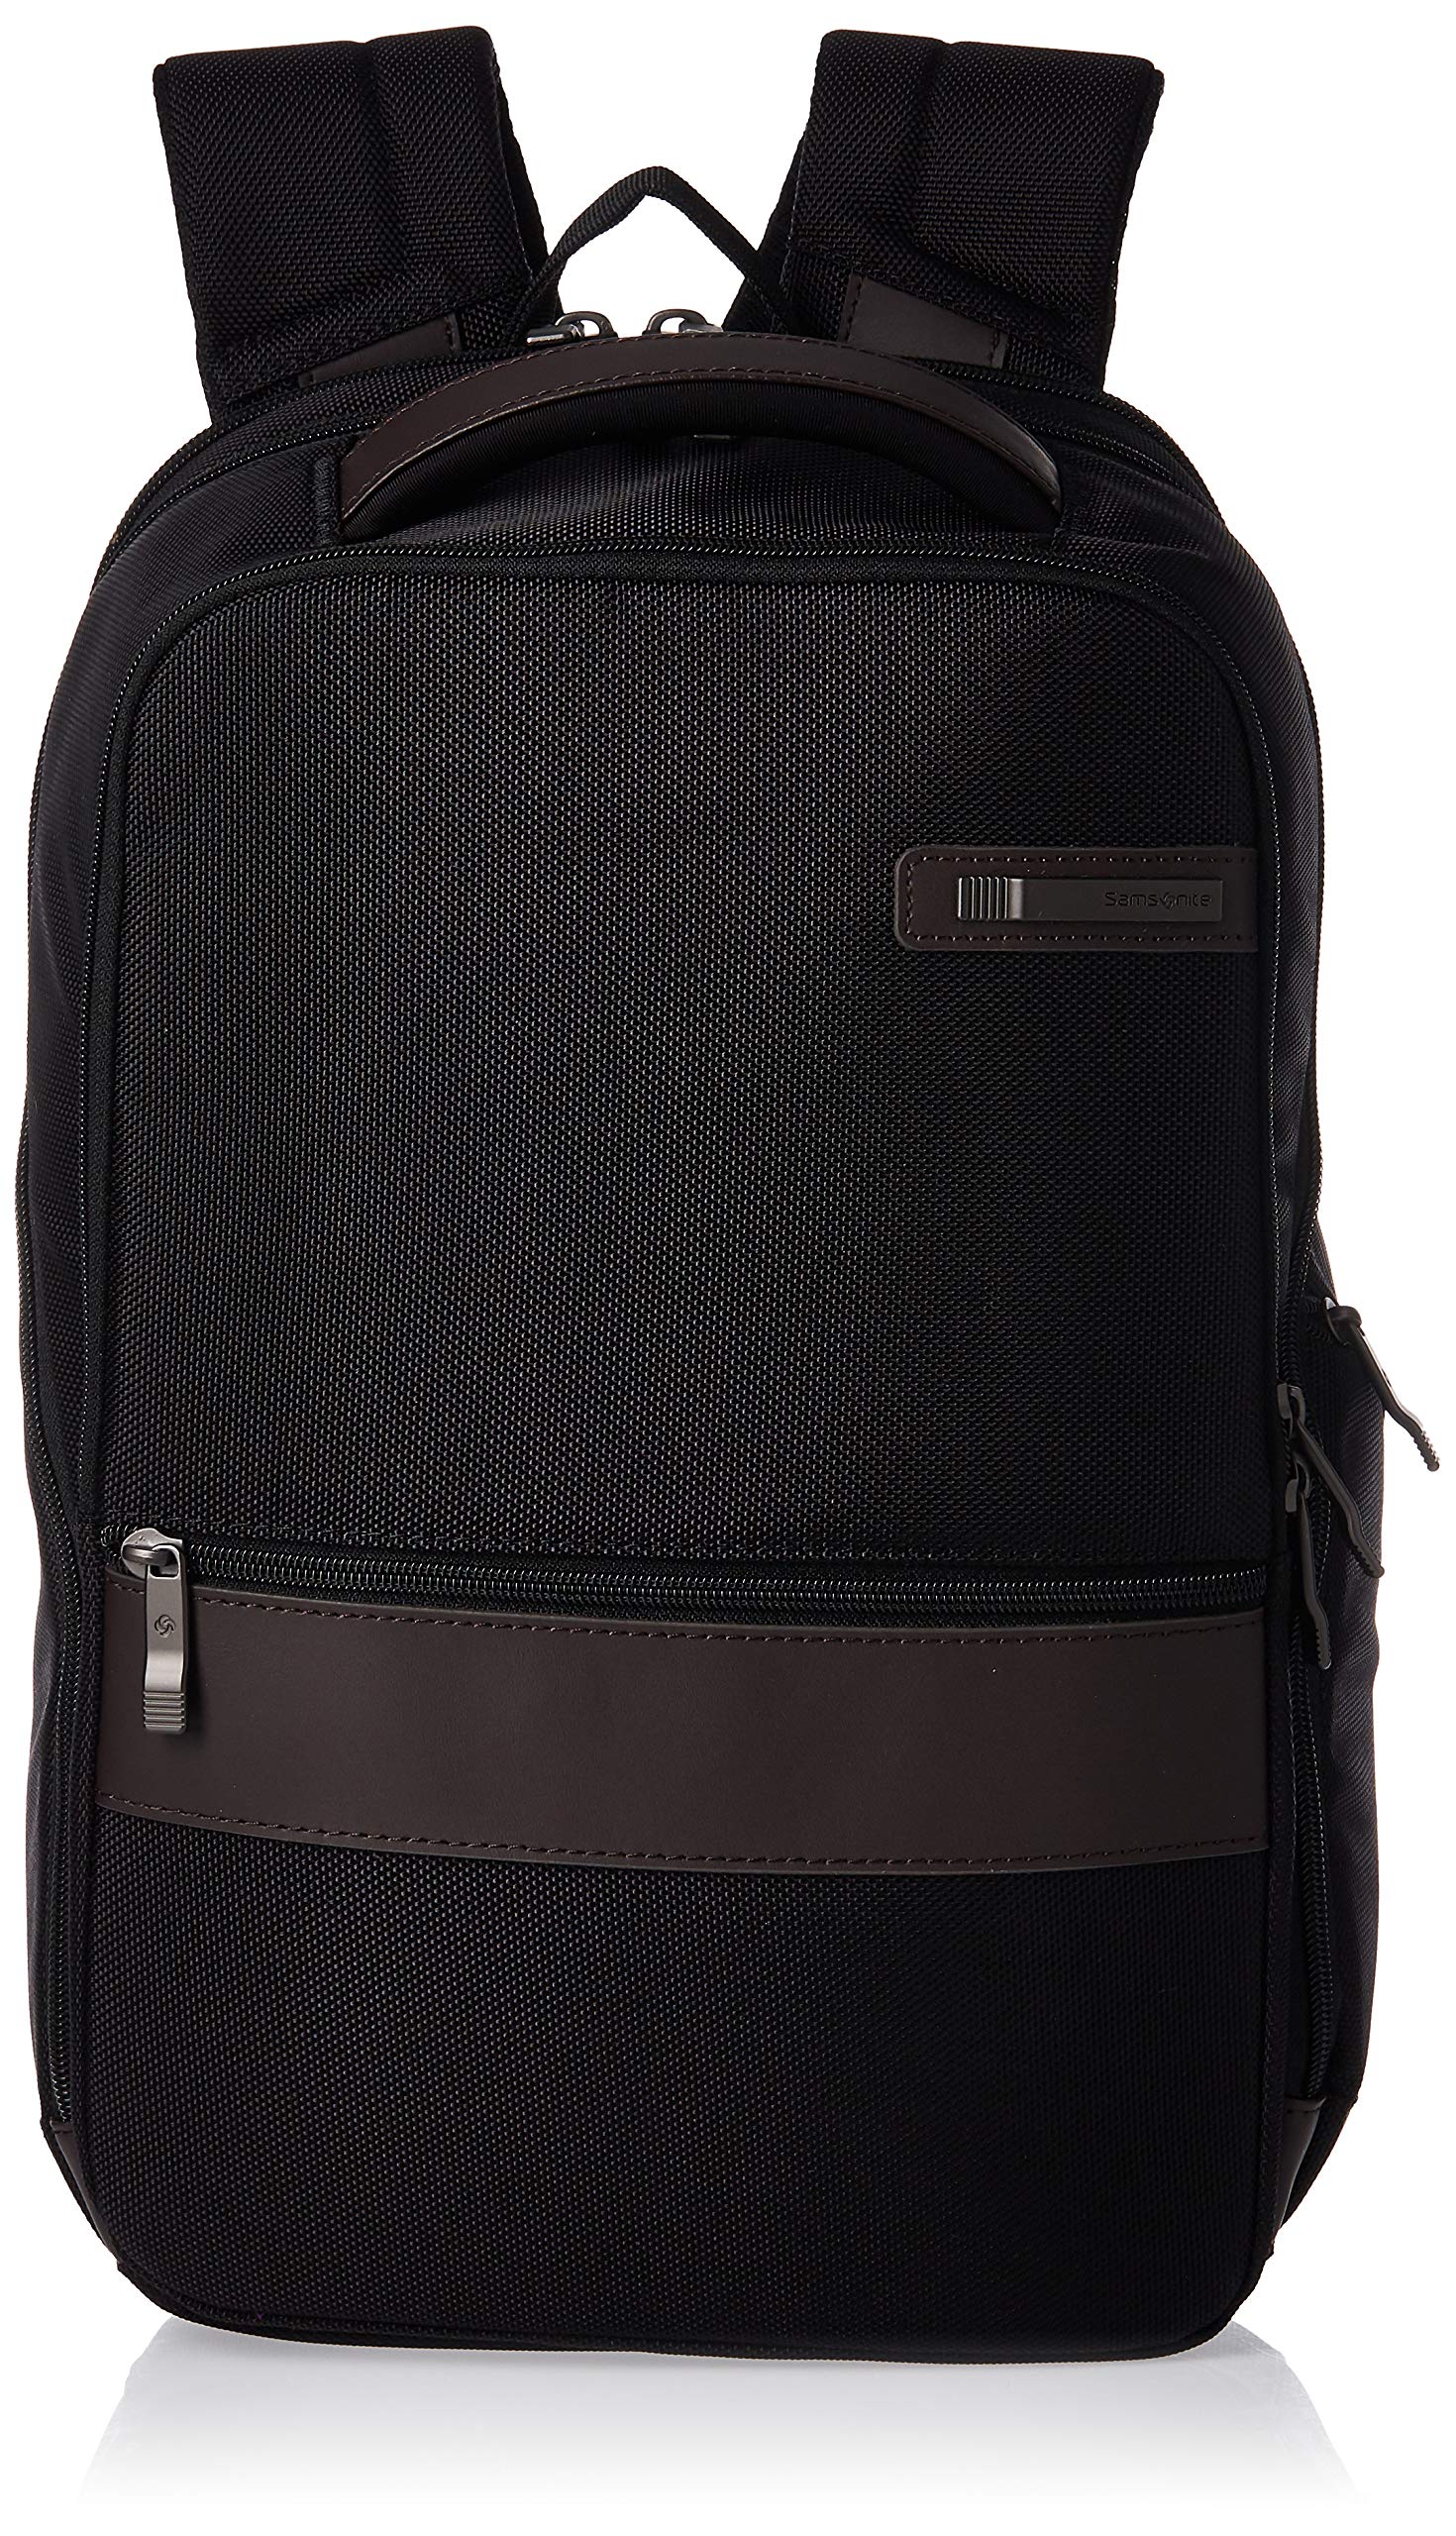 Samsonite Kombi Business Backpack, Black/Brown, 16.25 x 10.5 x 5-Inch